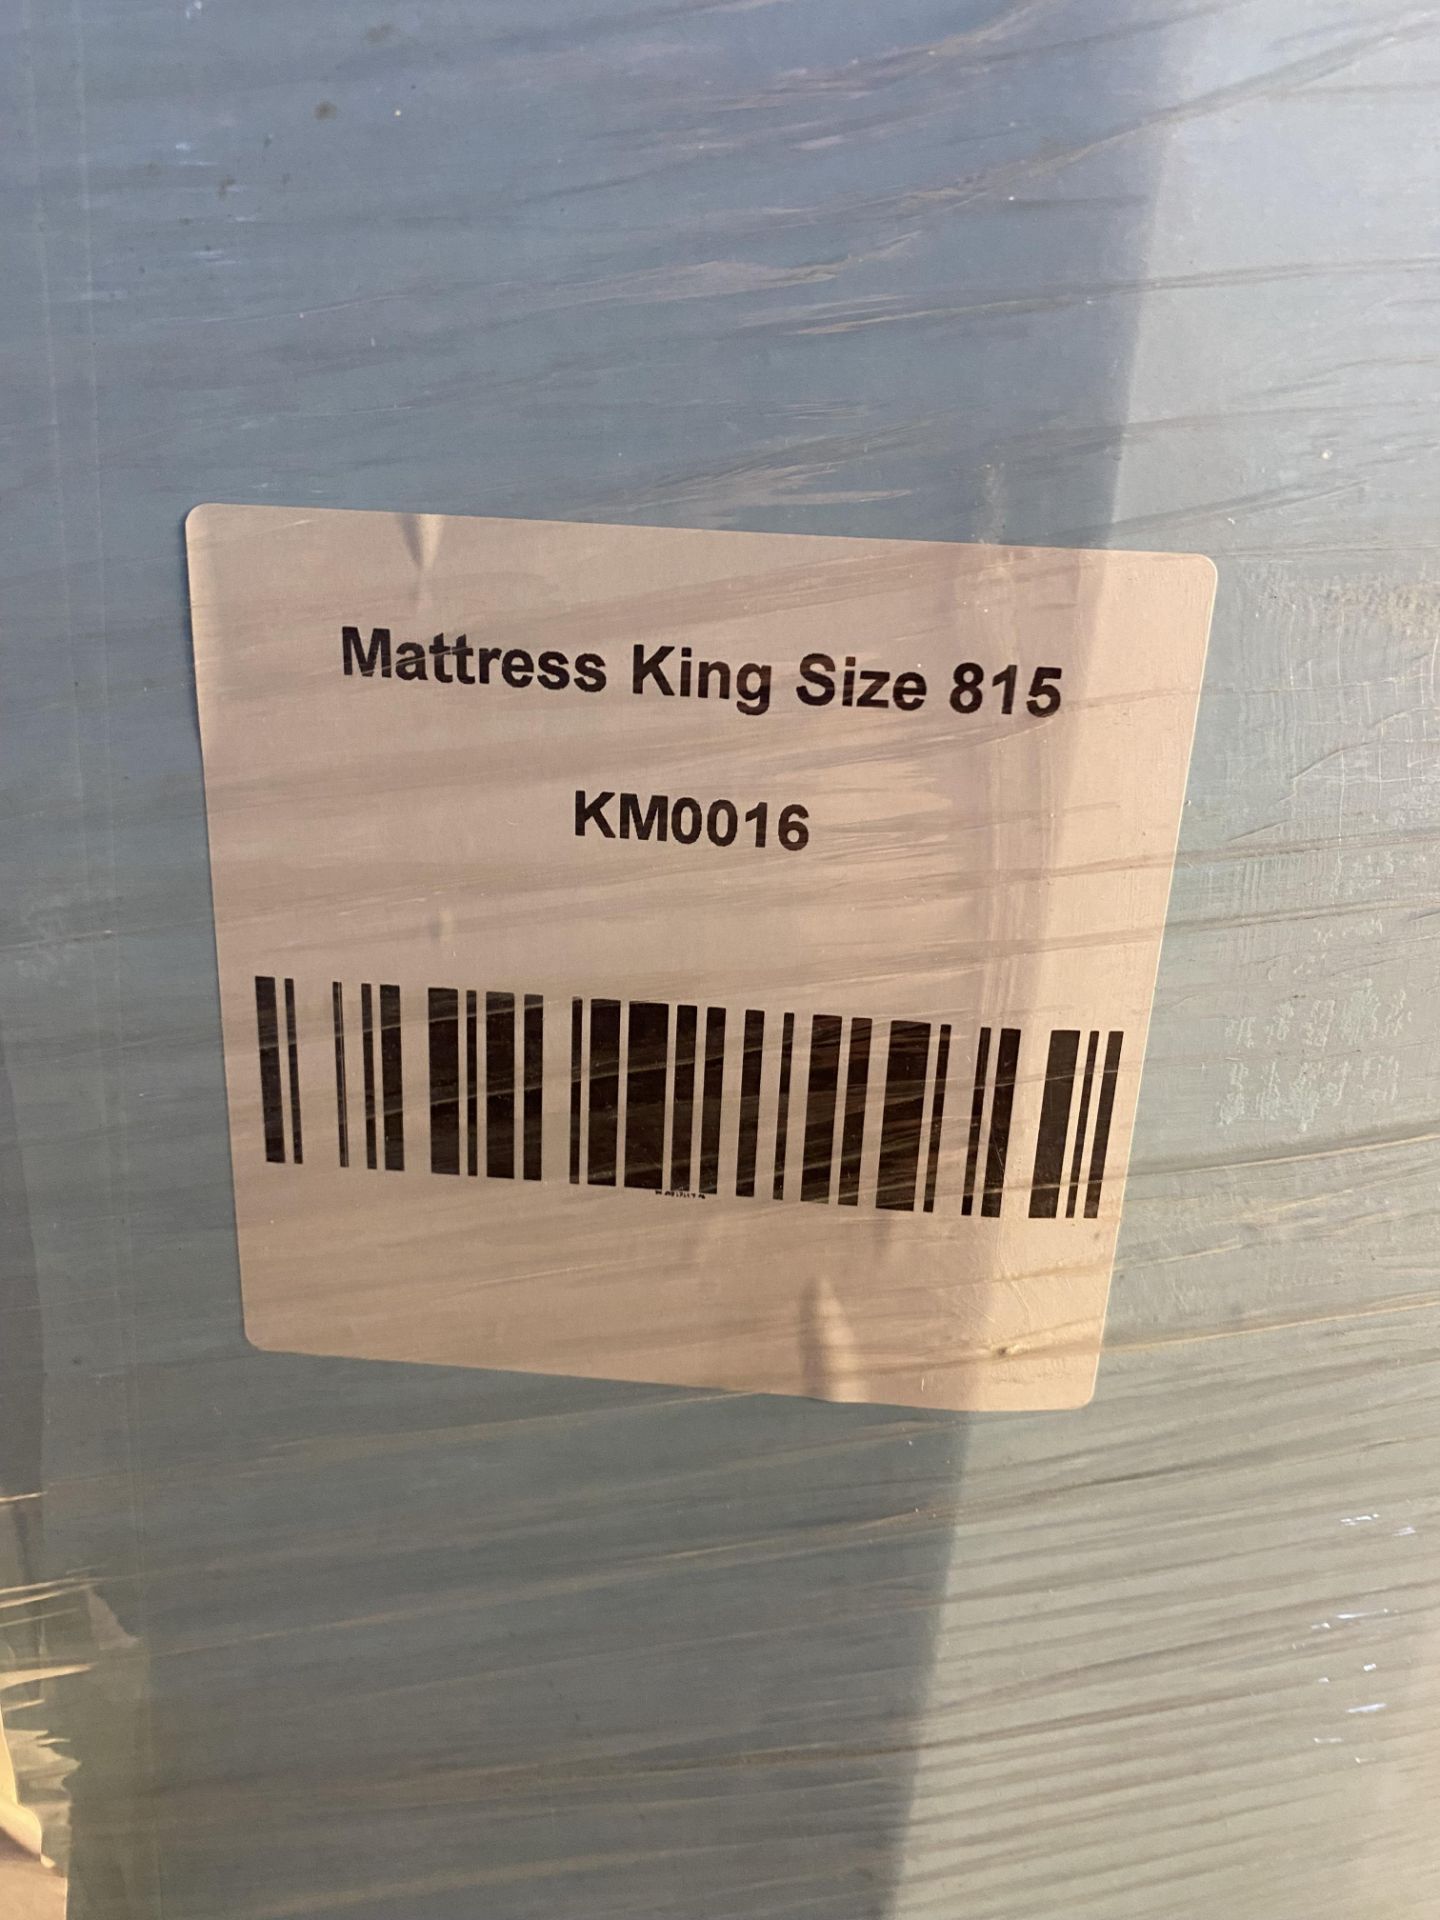 ComfaSleep KM0015 King Size 817 Mattress - Image 6 of 6